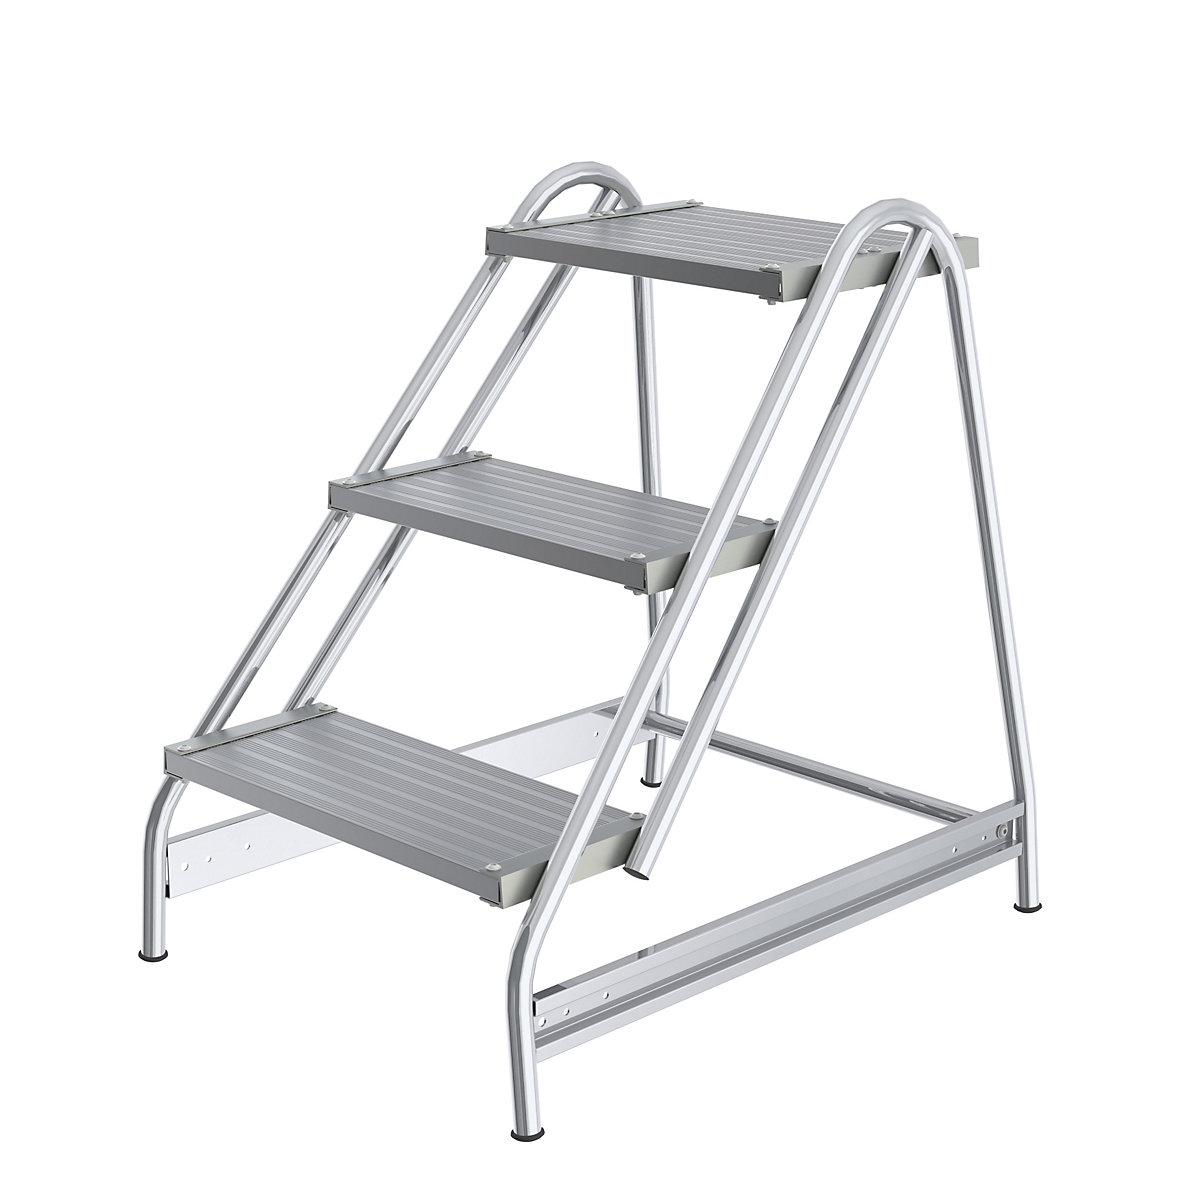 Aluminium work platform – MUNK, steps made of ribbed aluminium, single sided access, 3 steps